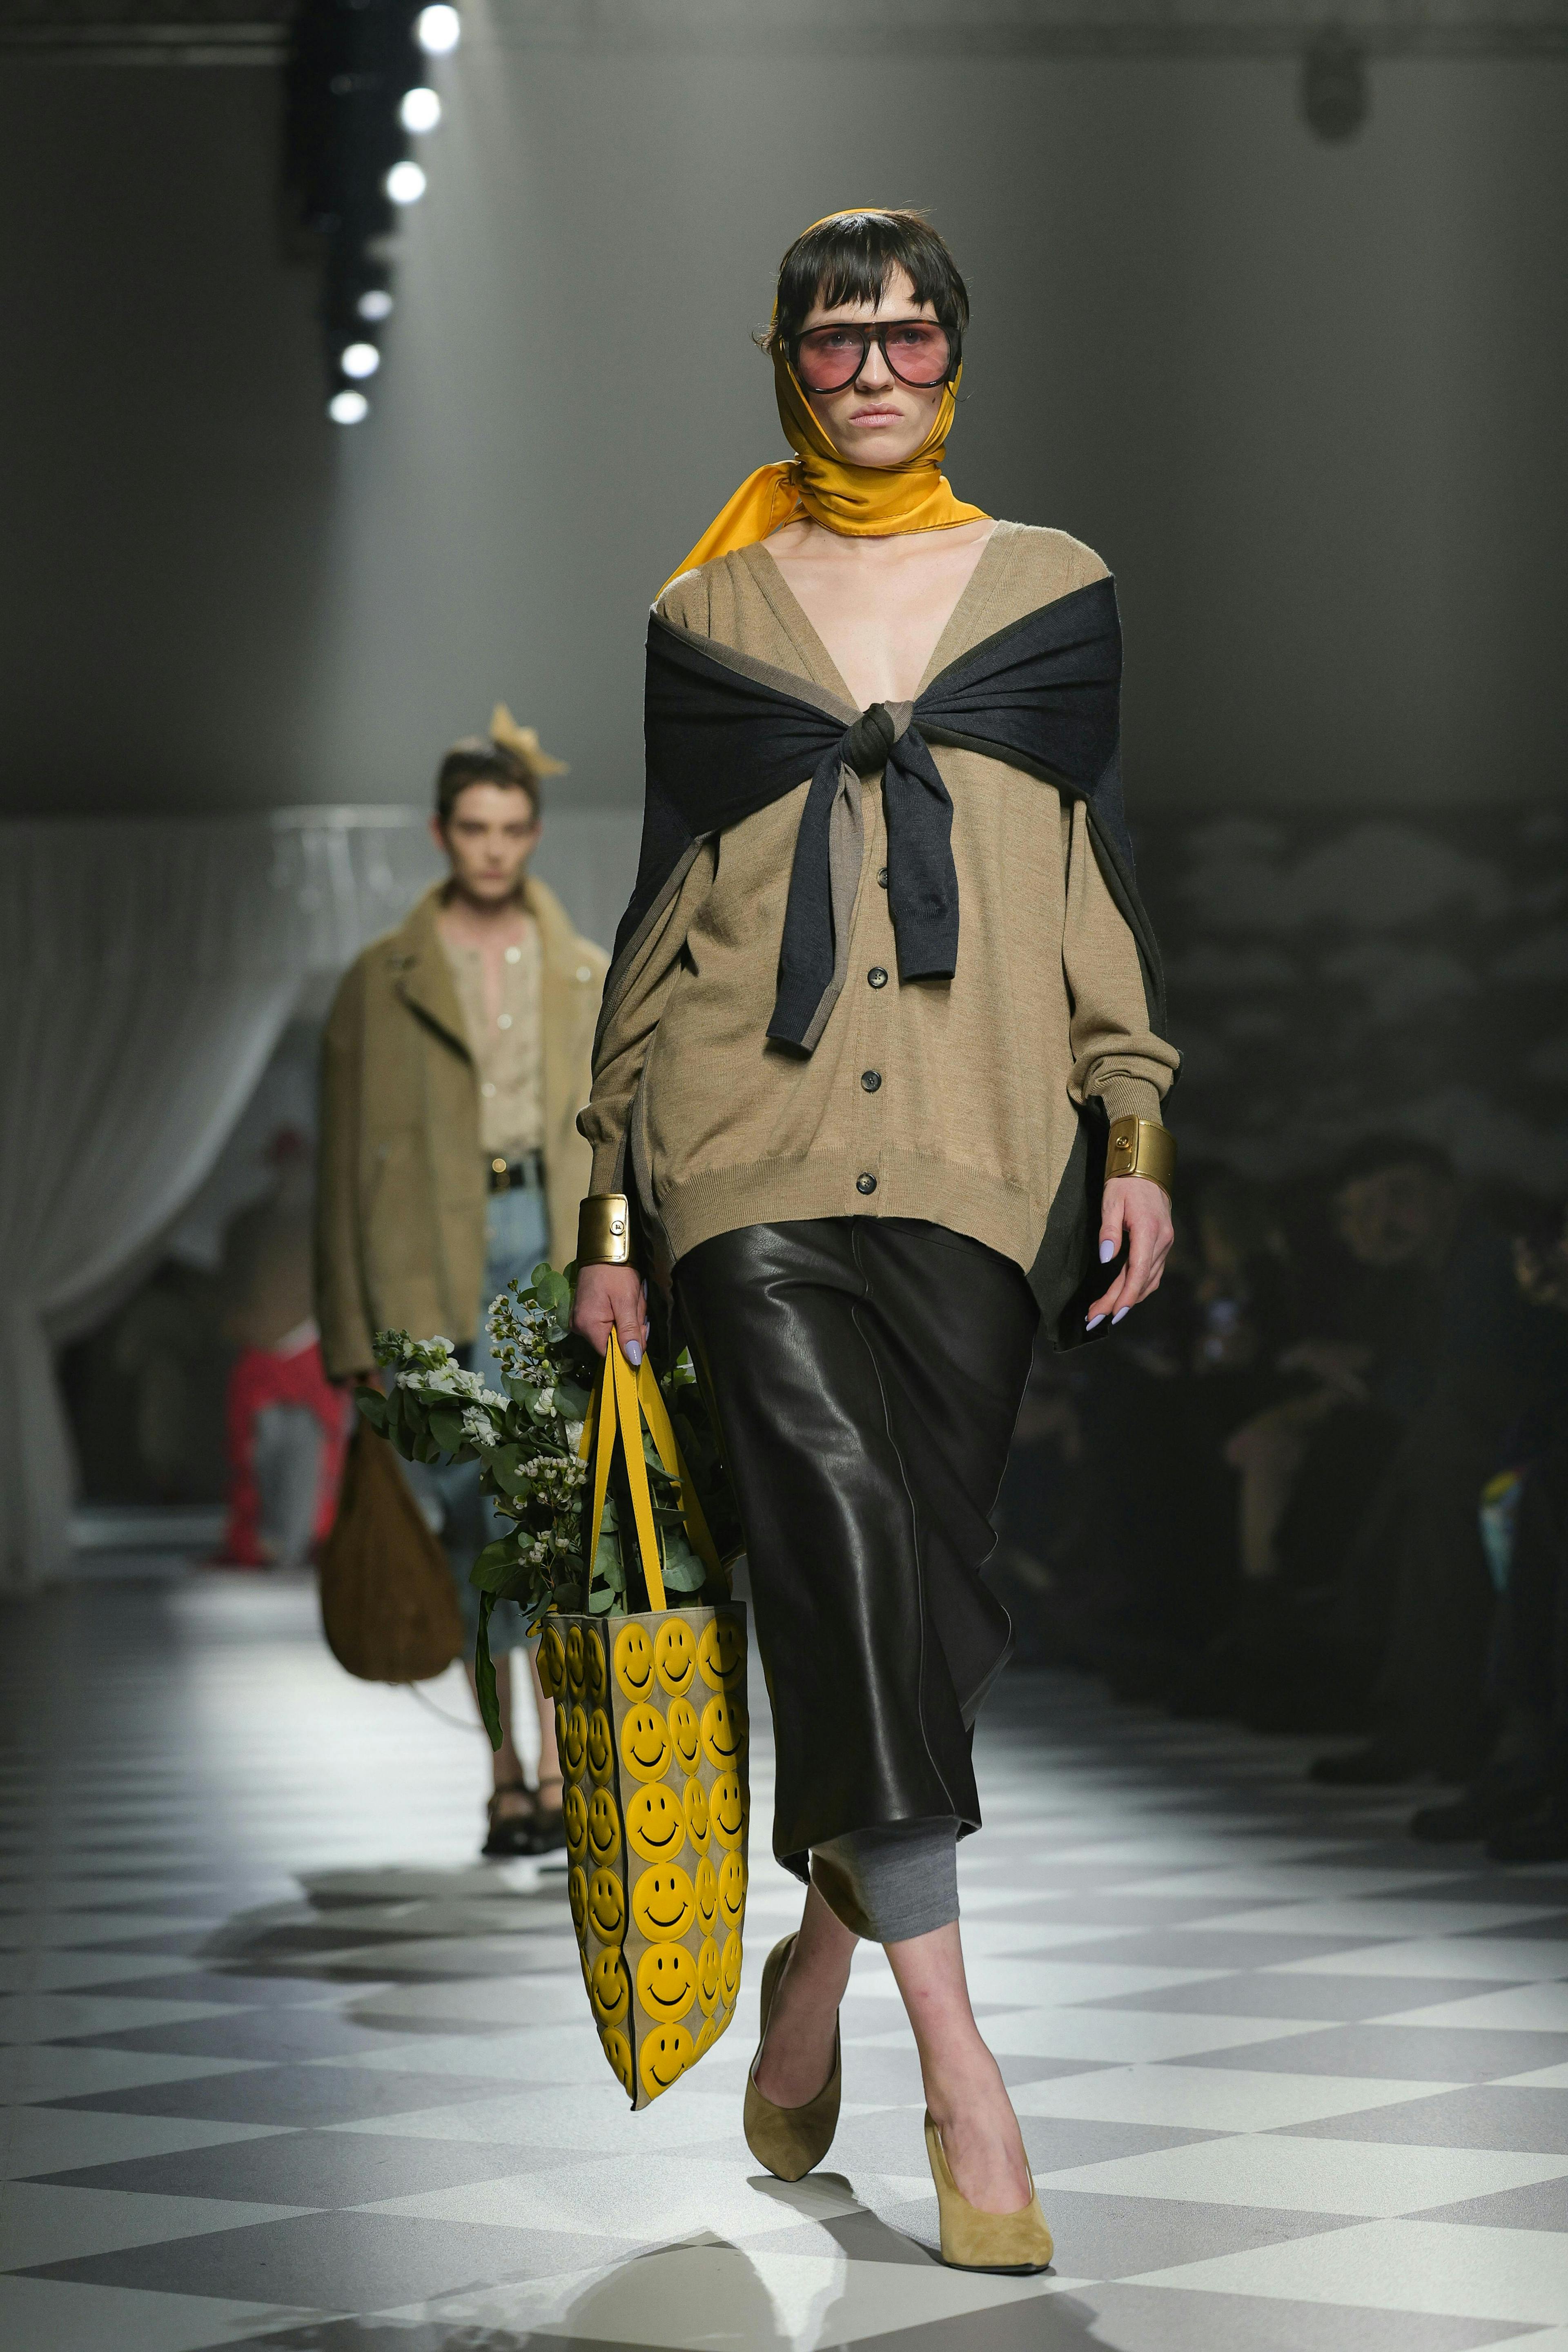 milan fashion bag handbag adult male man person long sleeve high heel purse